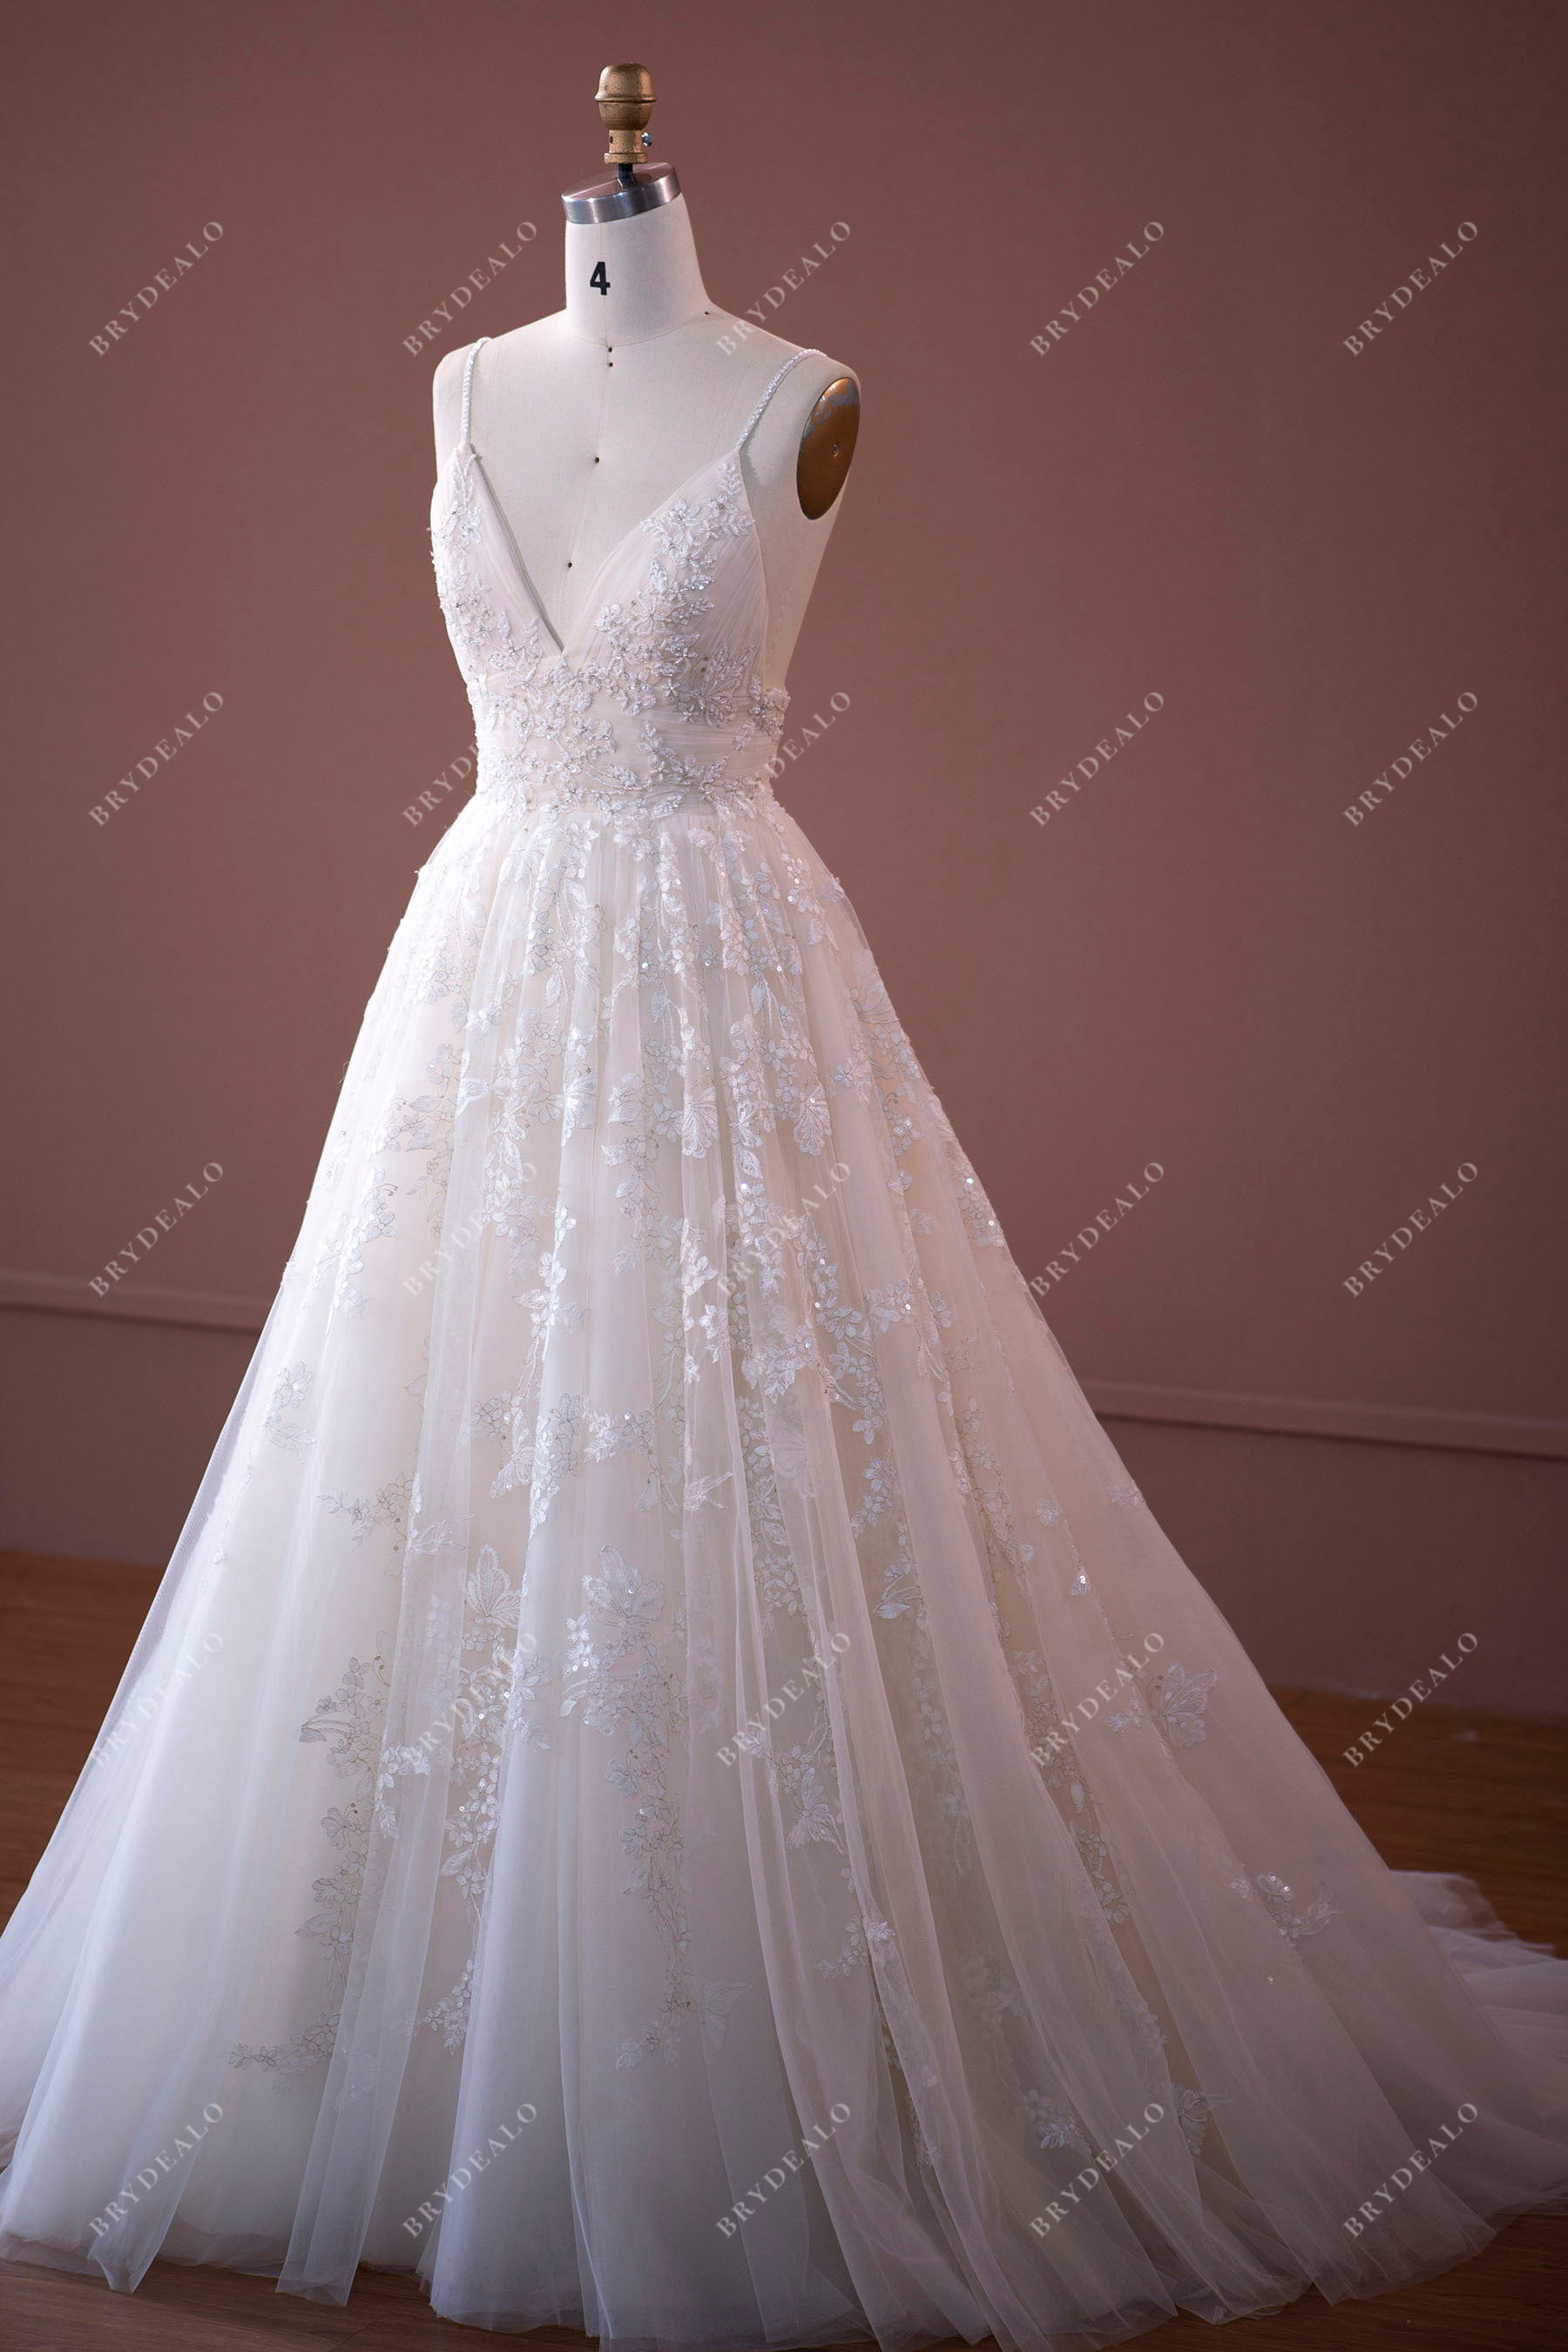 Sleeveless Spaghetti Strap Floral A-line Wedding Dress